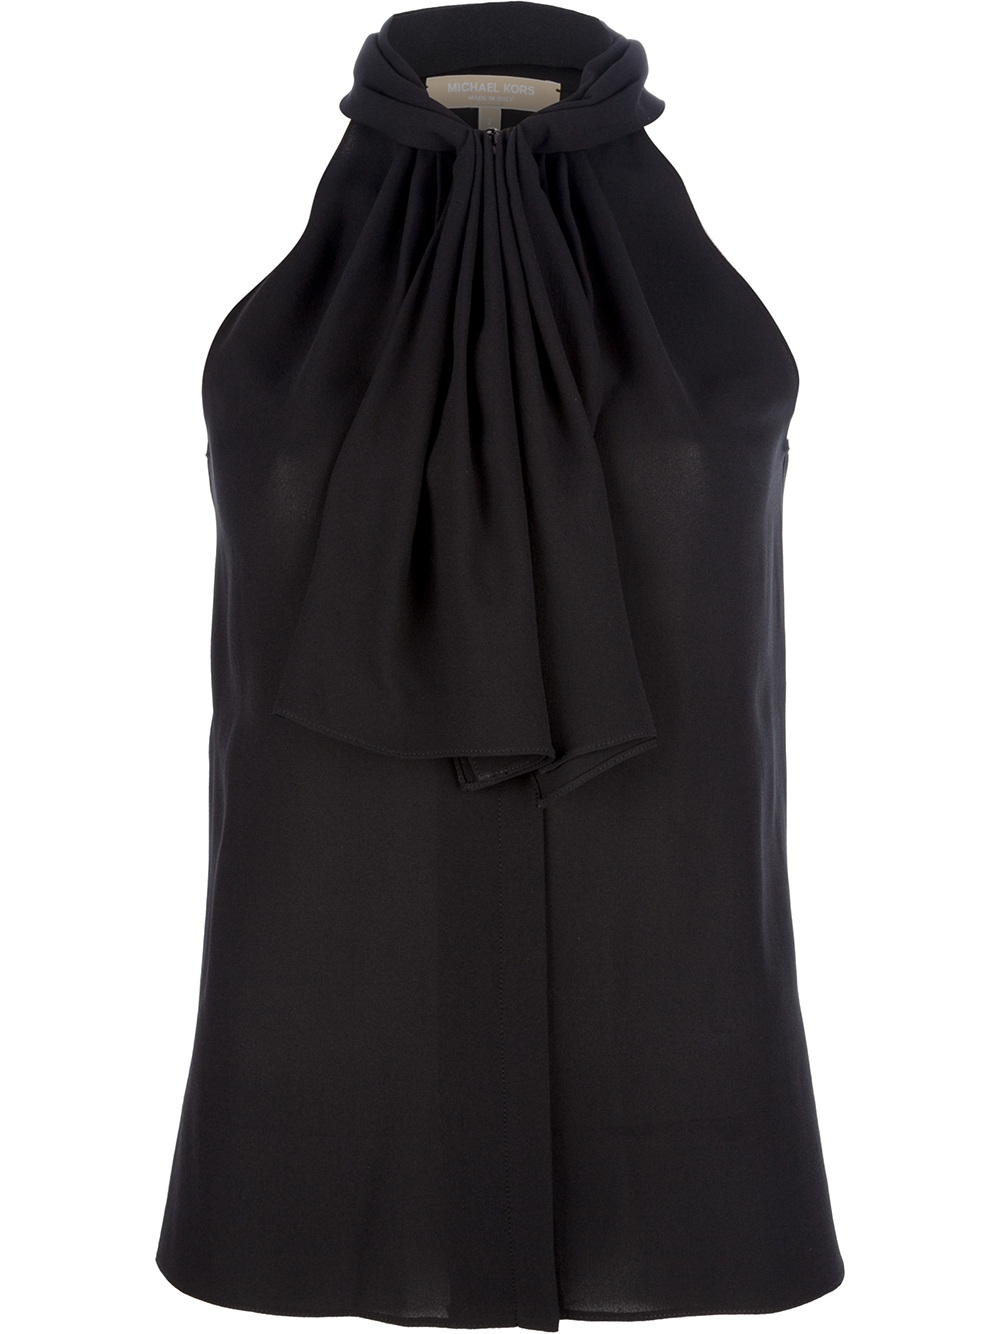 Lyst - Michael Kors Sleeveless Neck Tie Blouse in Black